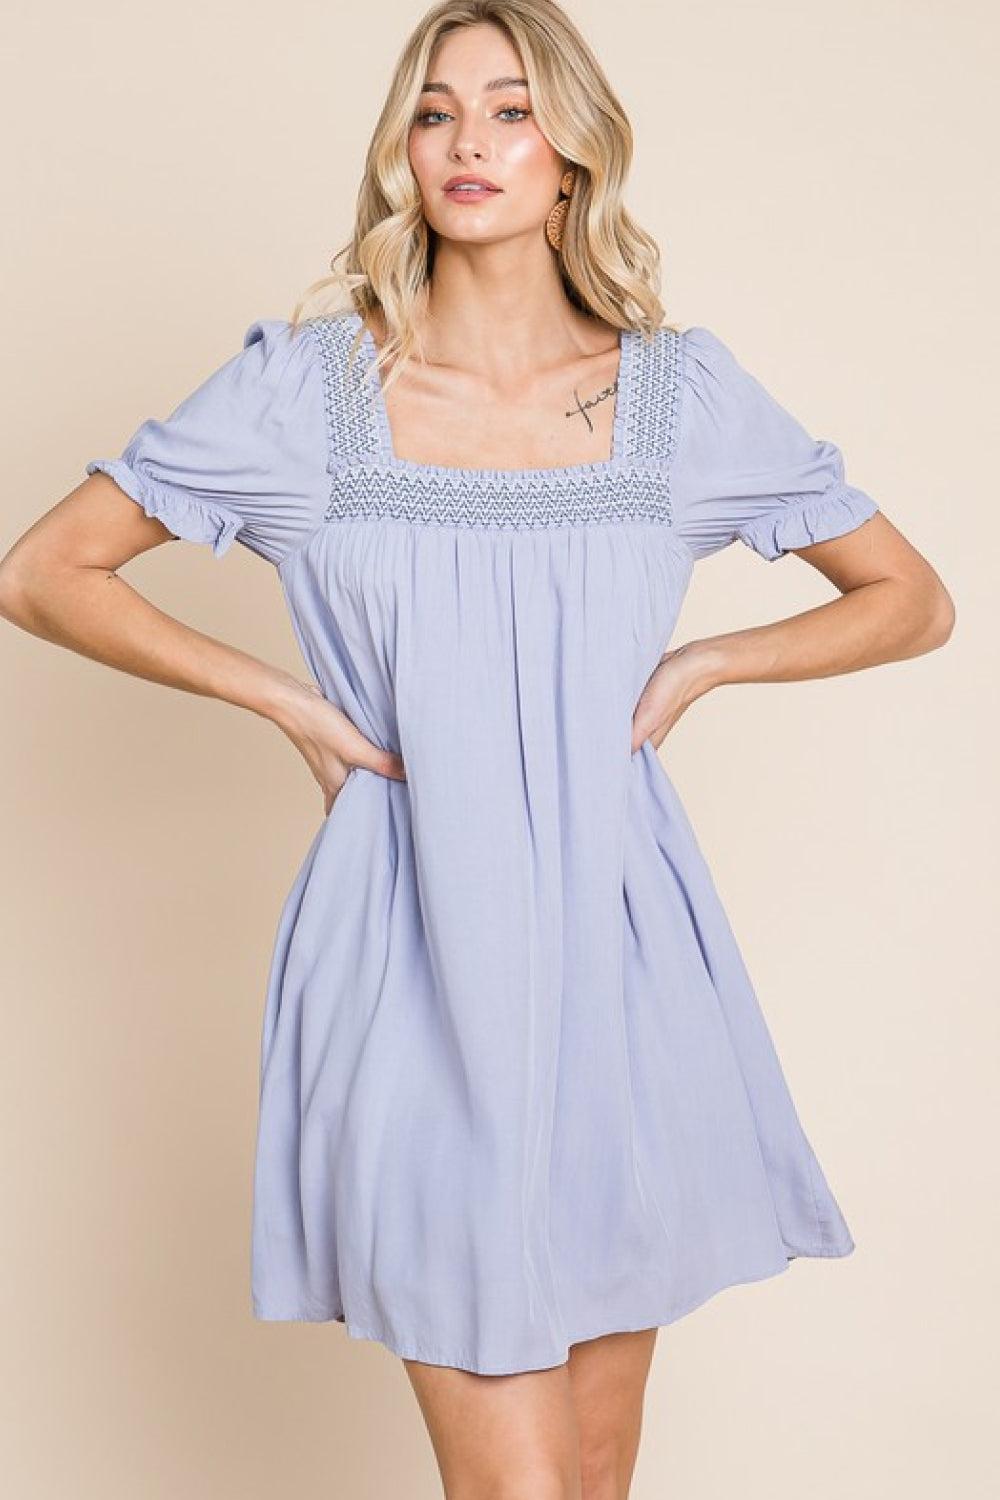 HEYSON Full Size Scenic Overlook Puff Sleeve Embroidered Mini Dress